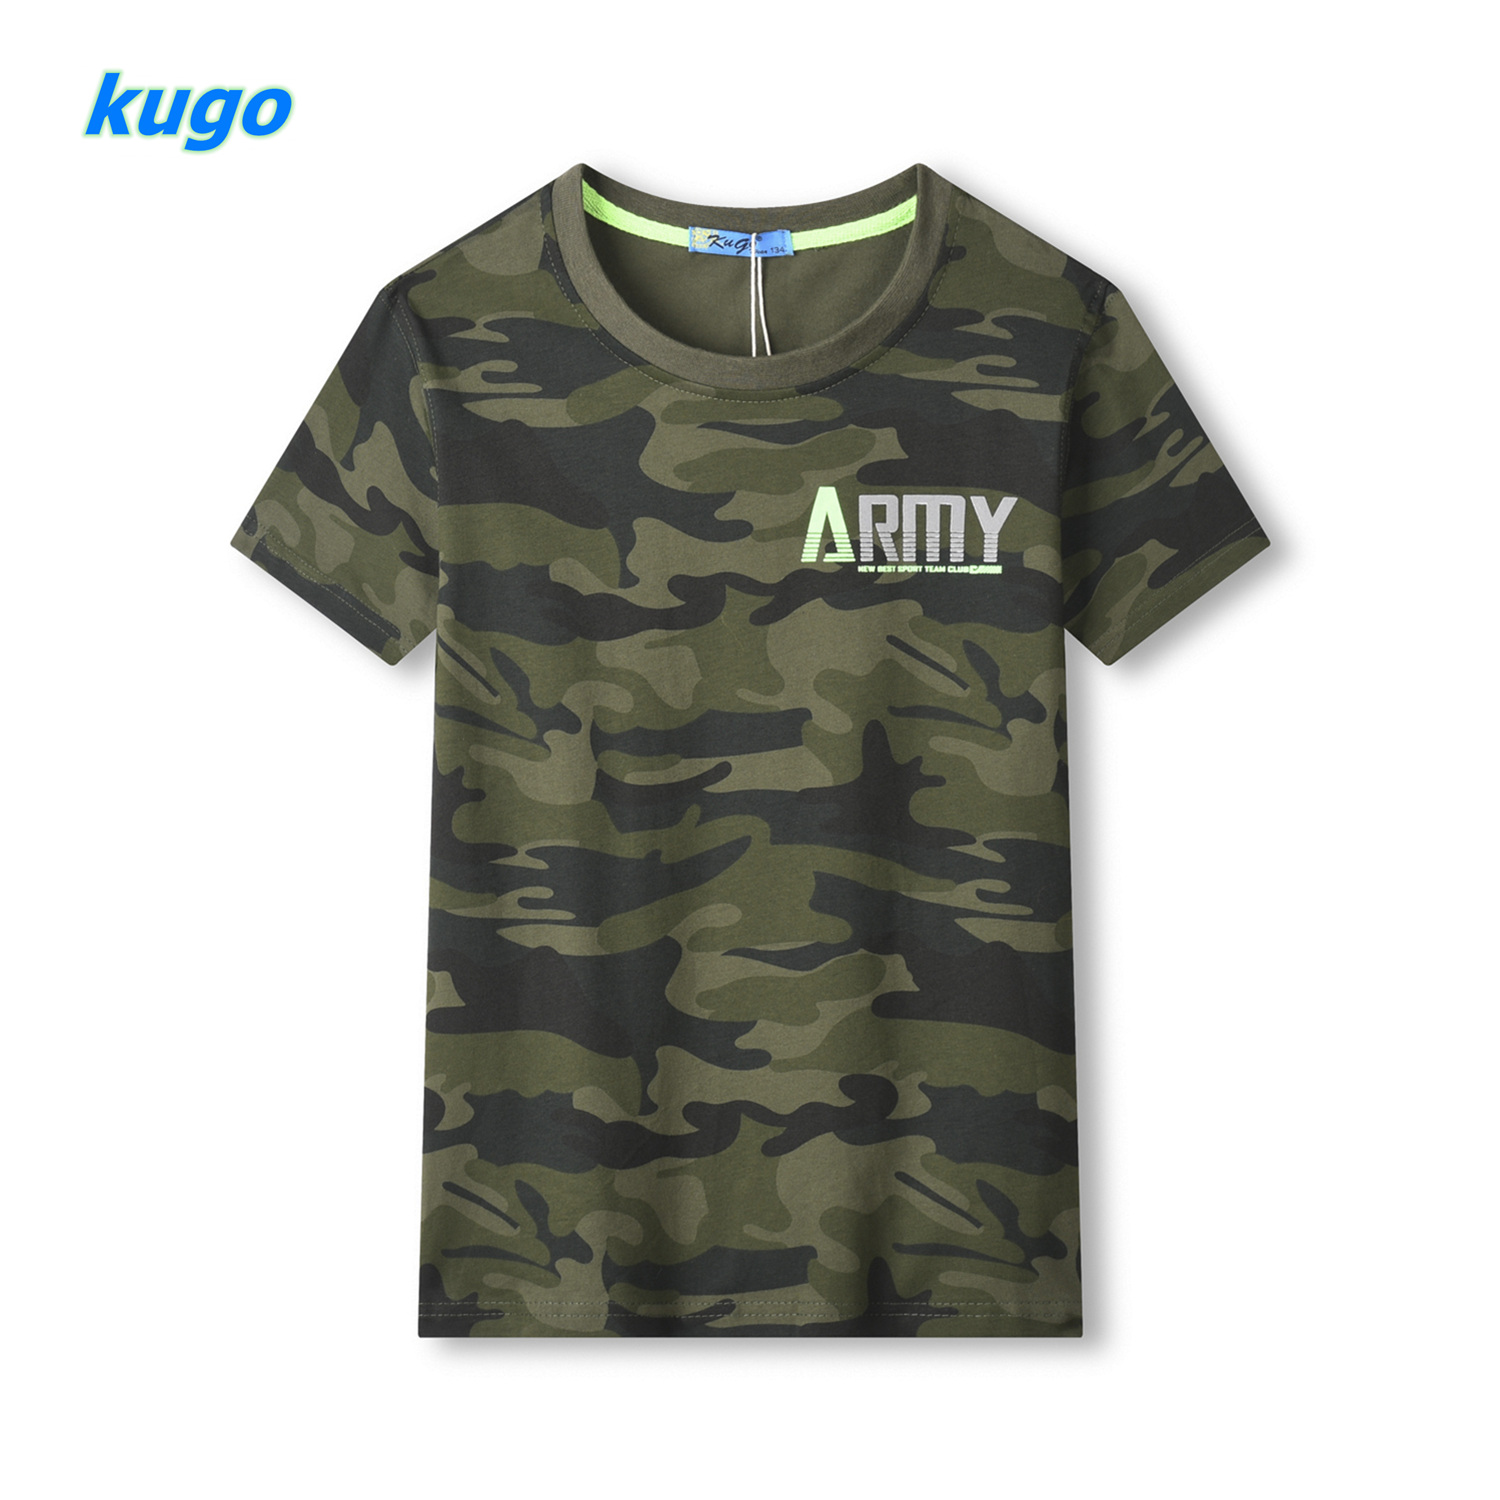 Chlapecké triko - KUGO TM9218, khaki/ tyrkysová aplikace Barva: Khaki, Velikost: 152